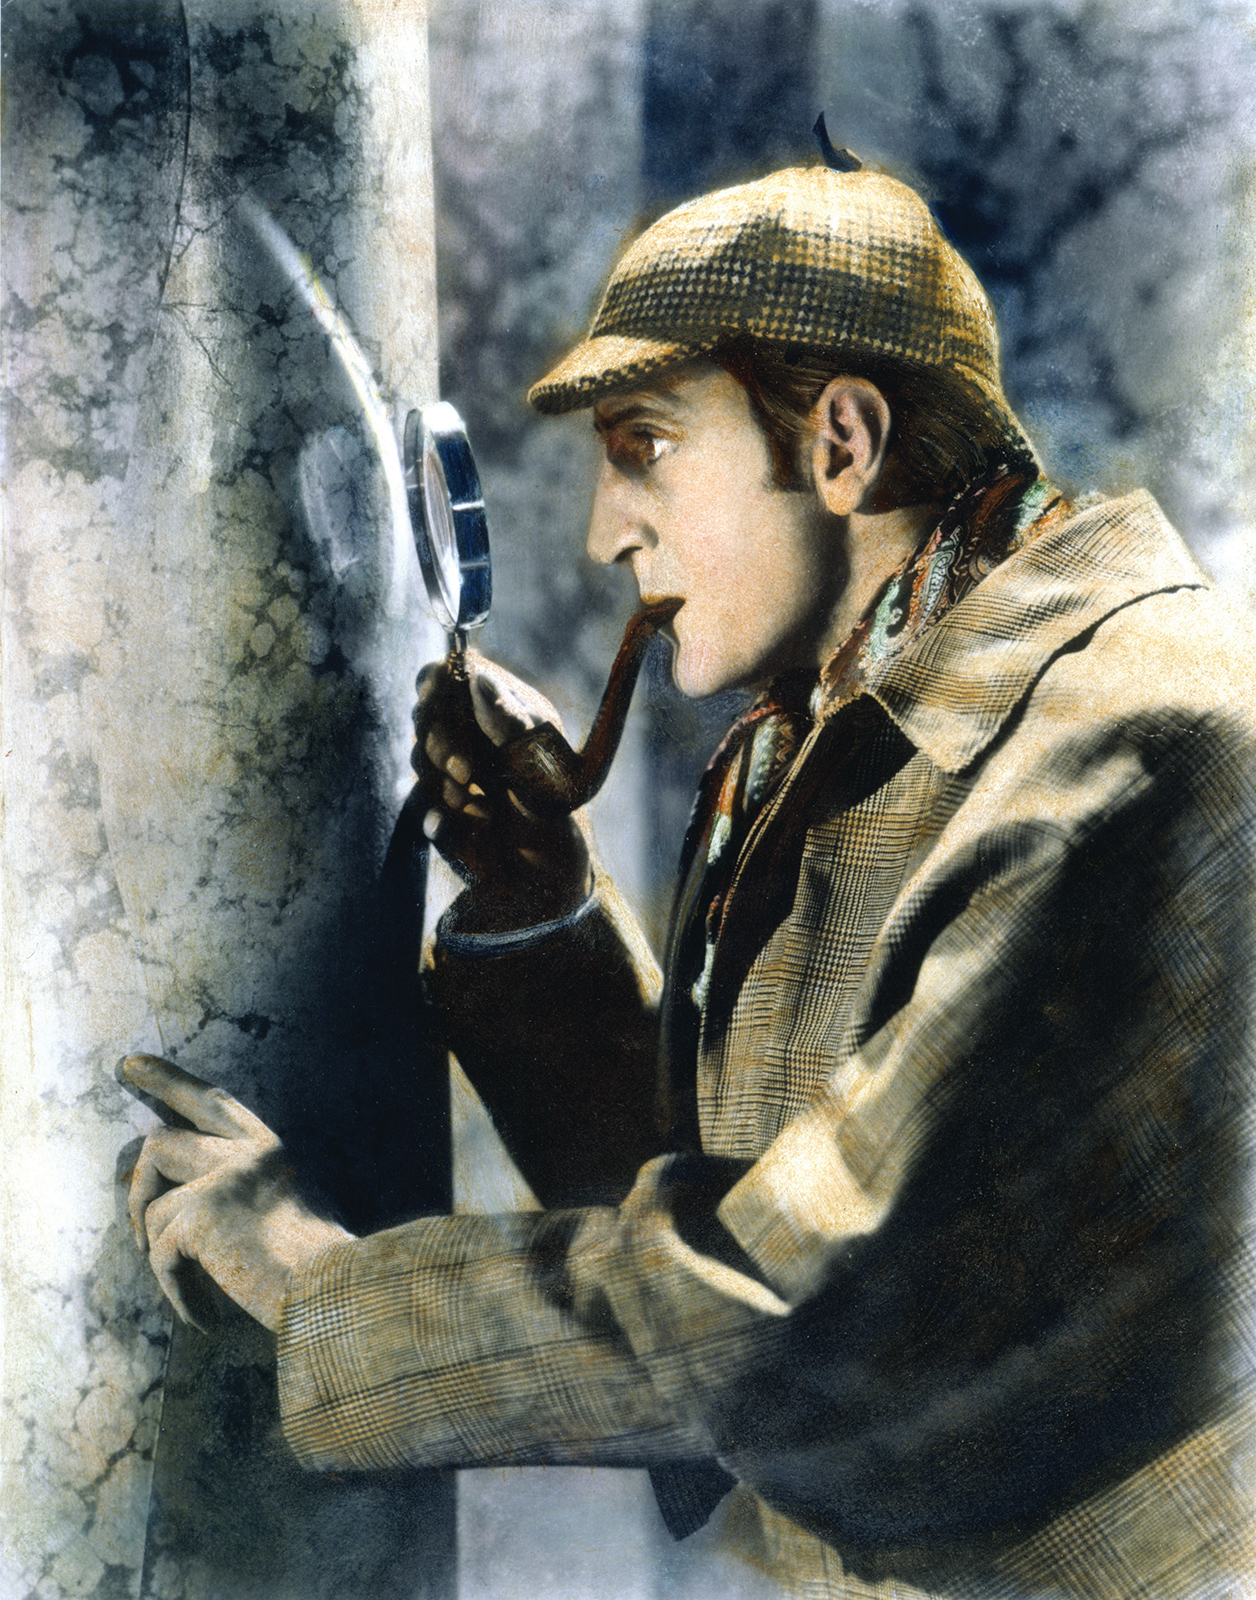 The appeal of Sherlock Holmes